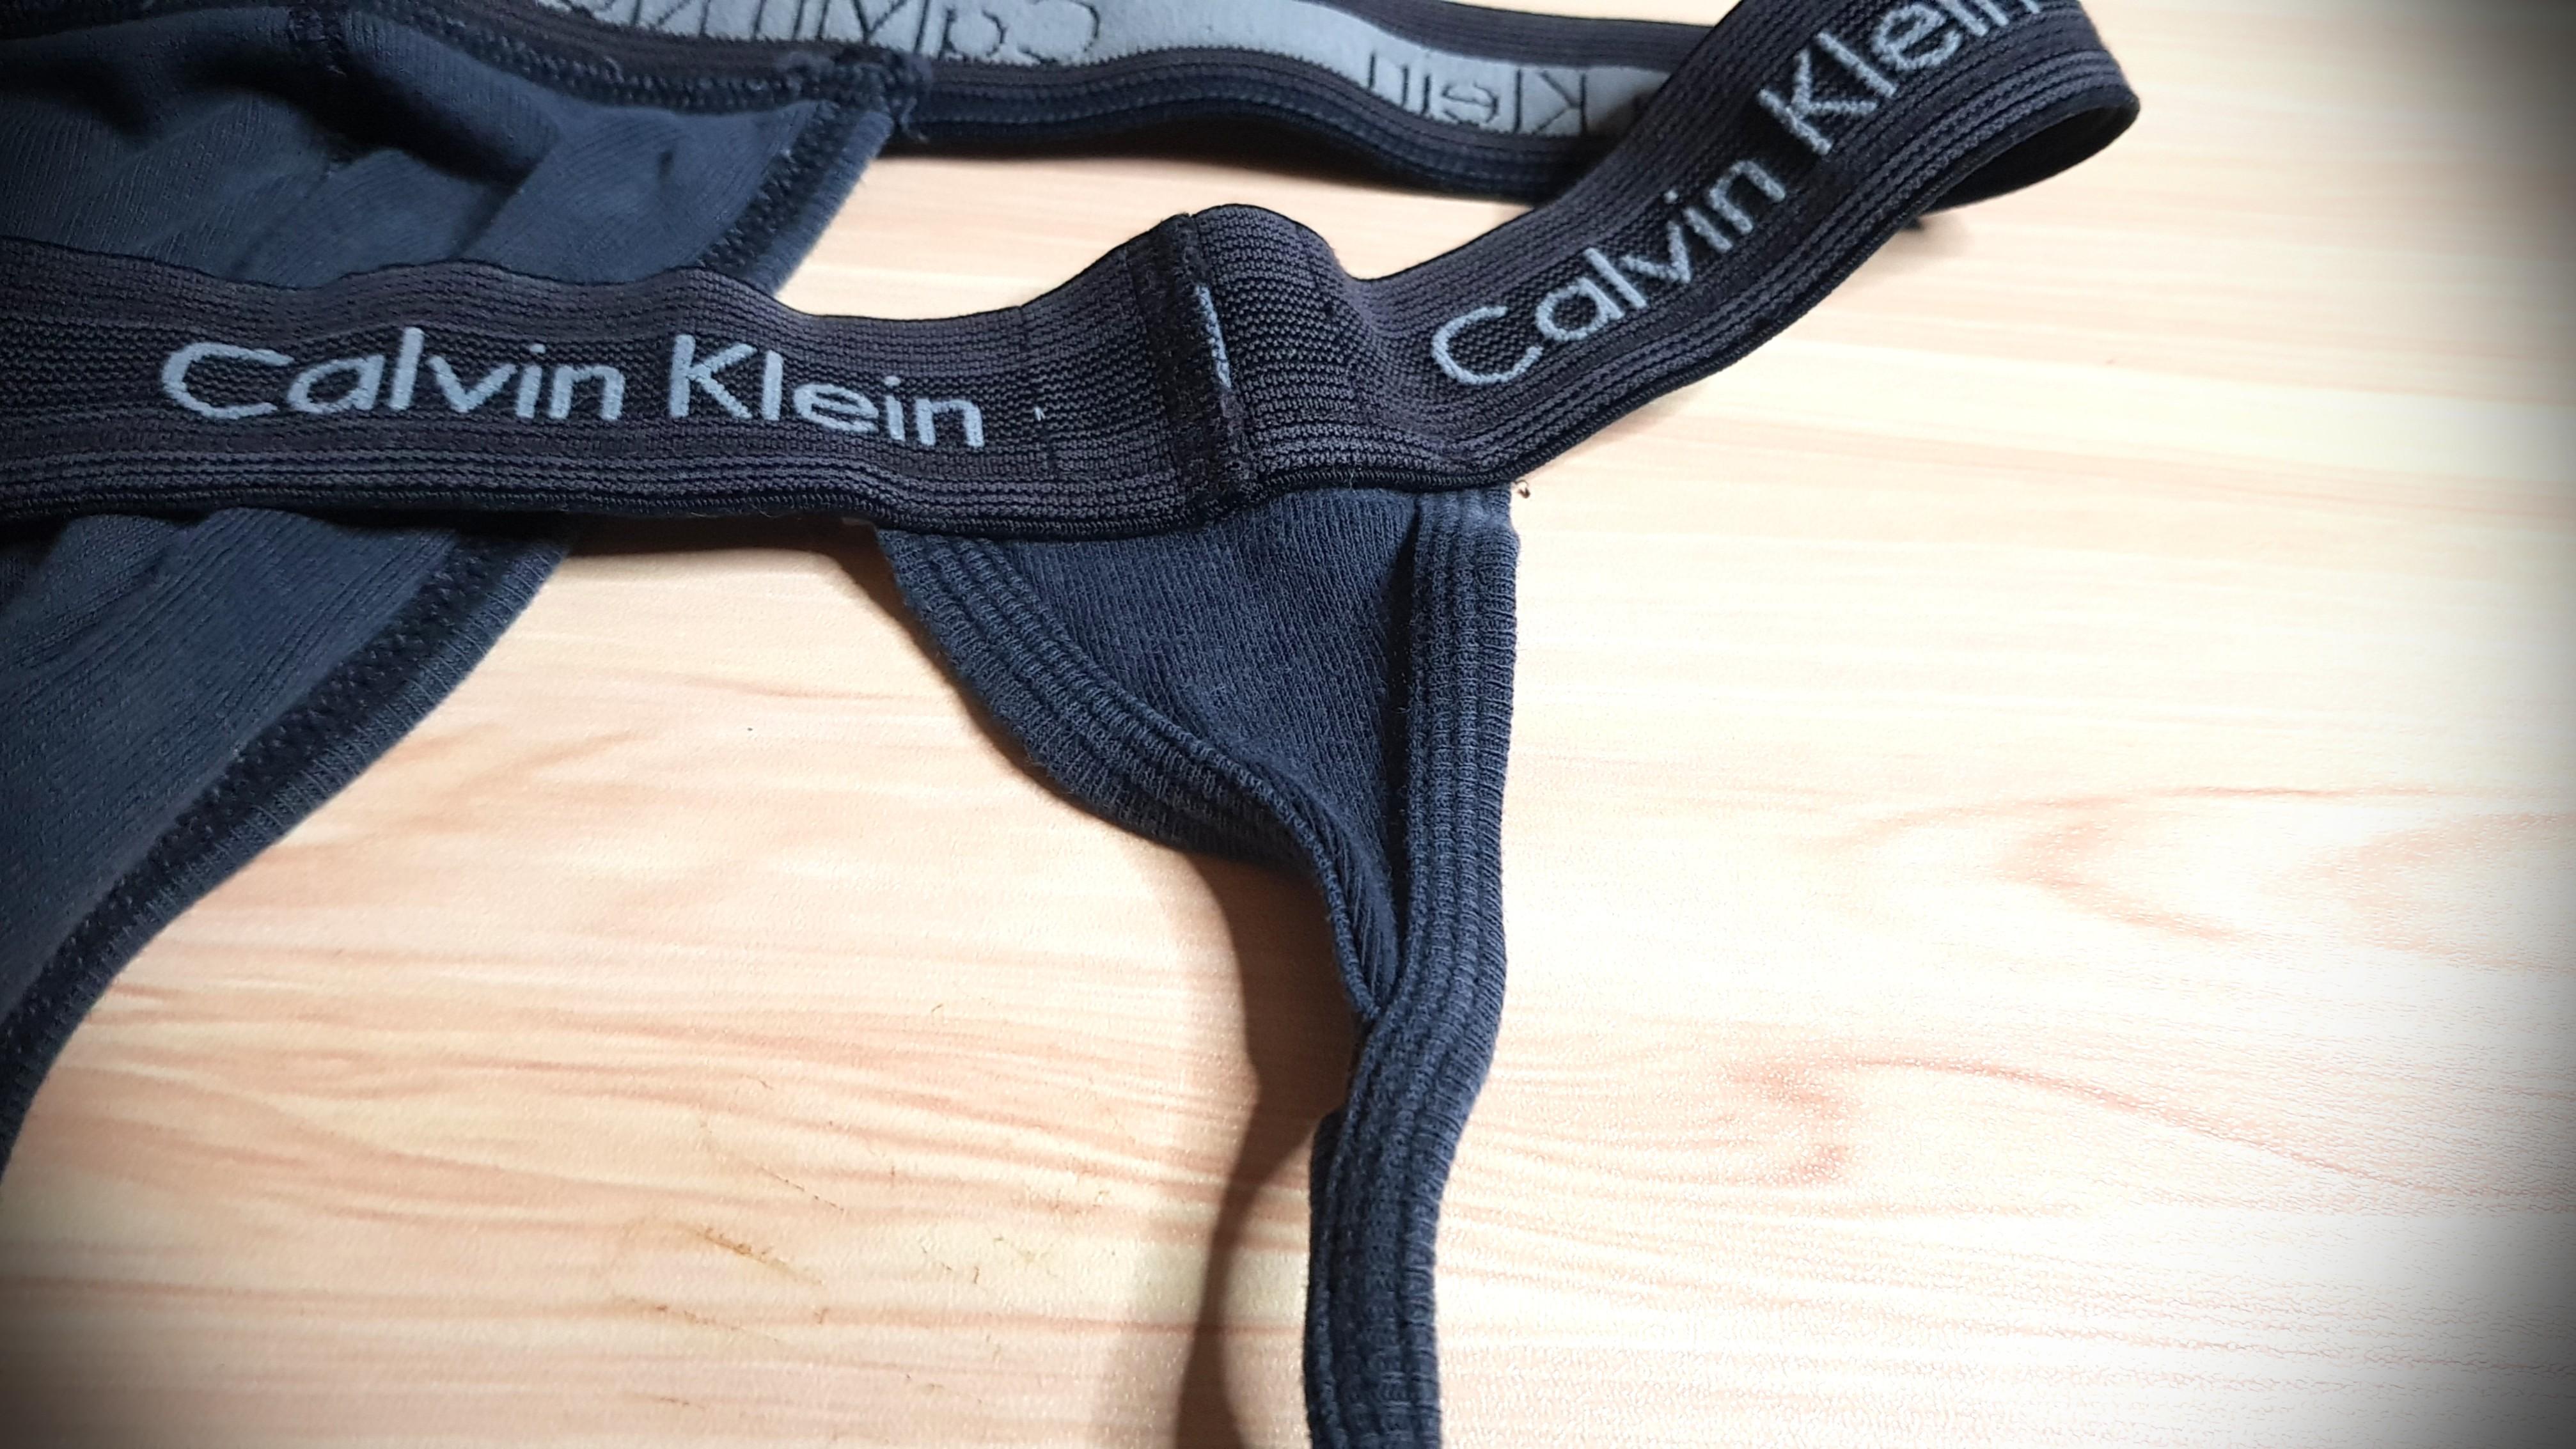 https://media.karousell.com/media/photos/products/2020/10/24/ck_men_underwear_thong_gstring_1603518150_7ce945b2_progressive.jpg